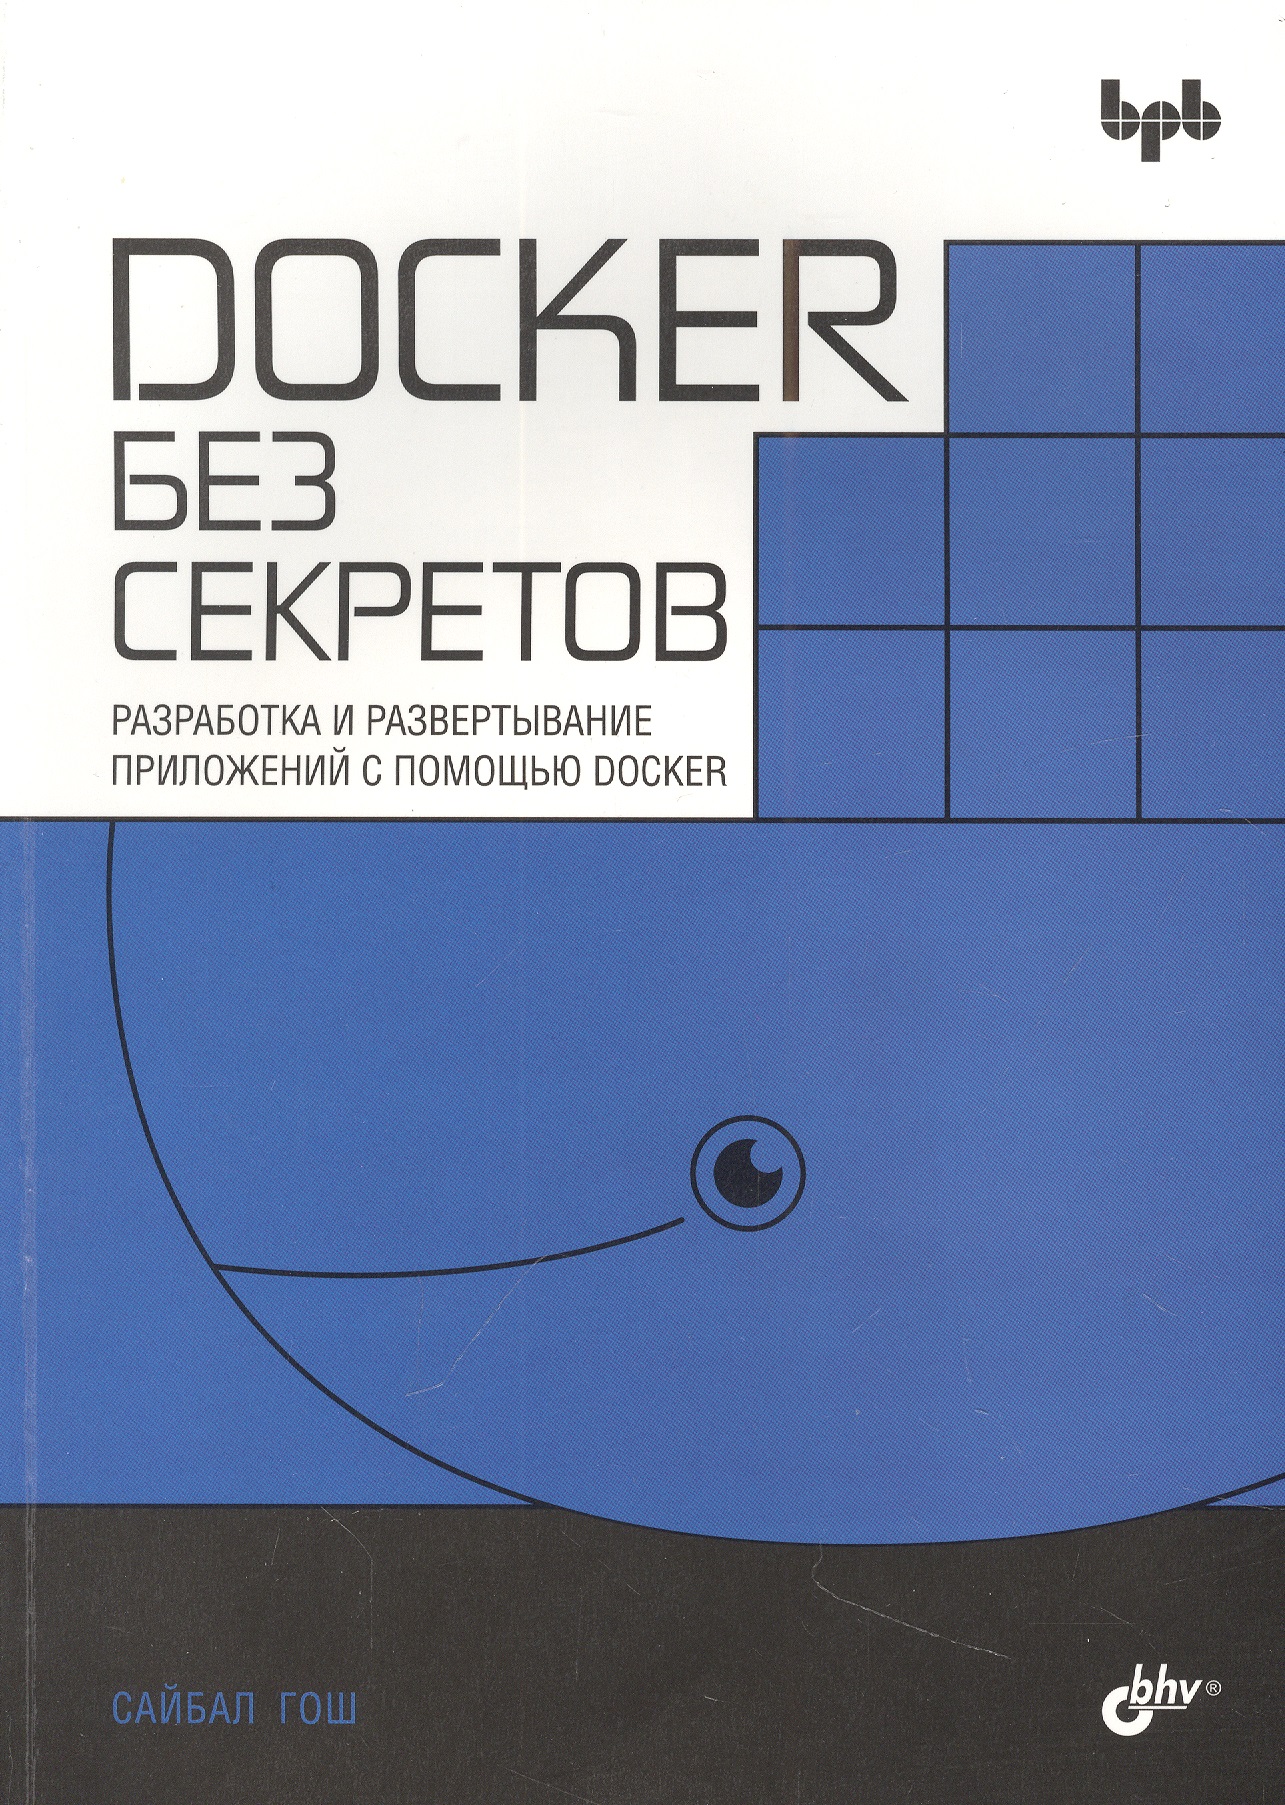 Docker без секретов docker основы